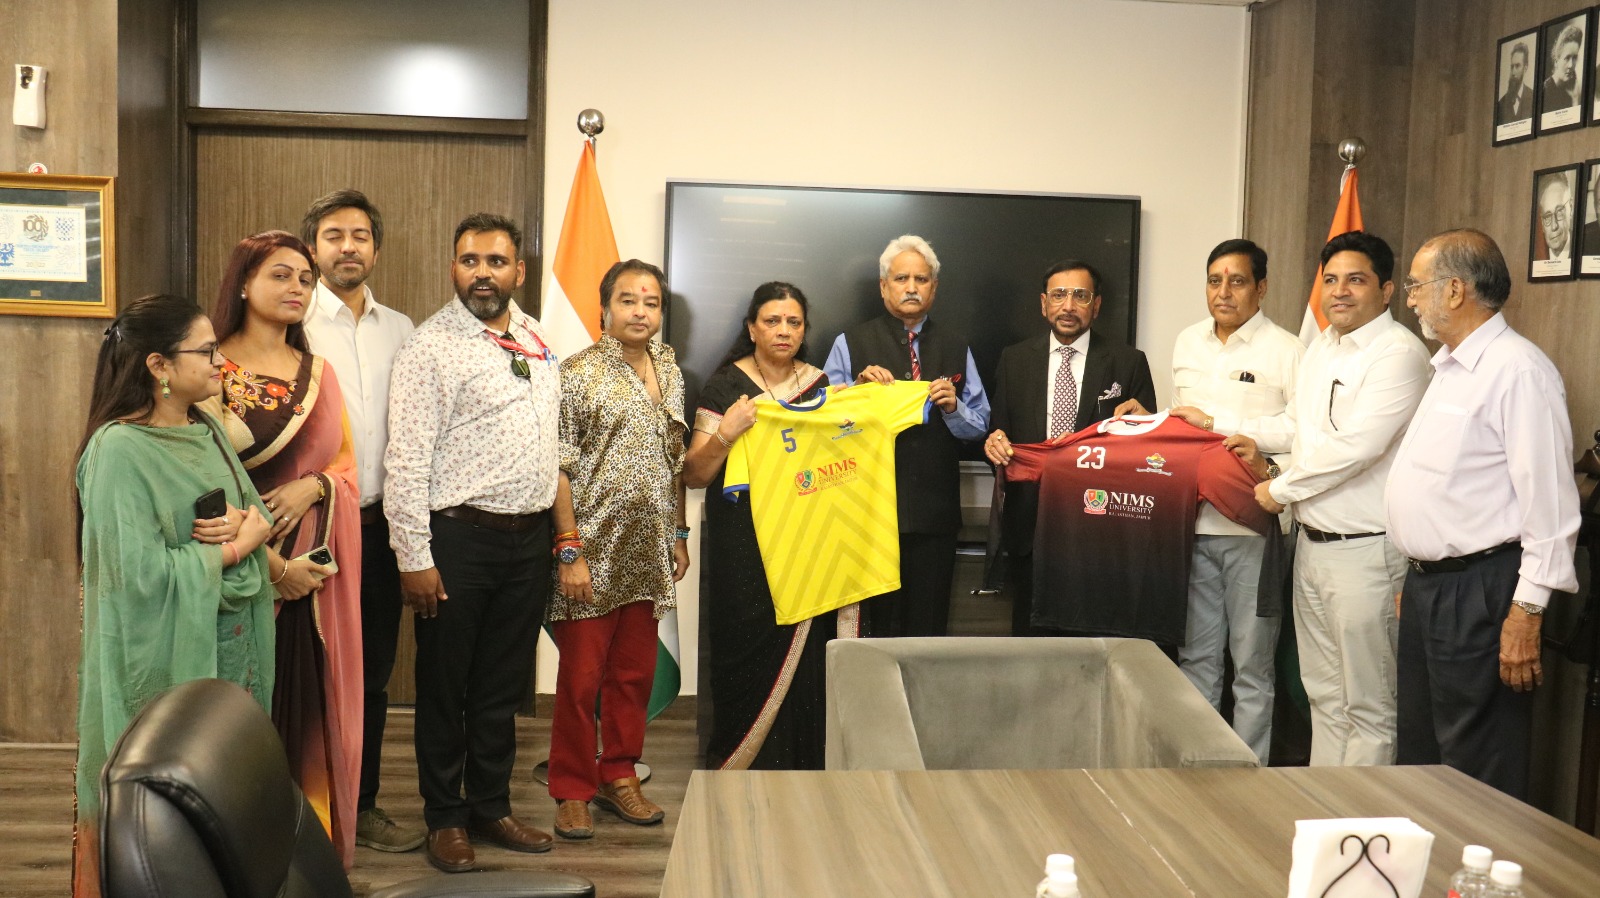 निम्स विश्वविद्यालय मे सम्पन्न हुआ राजस्थान फुटबॉल टीम जर्सी लॉन्च एण्ड प्लेयर्स फेलिस्टेशन प्रोग्राम